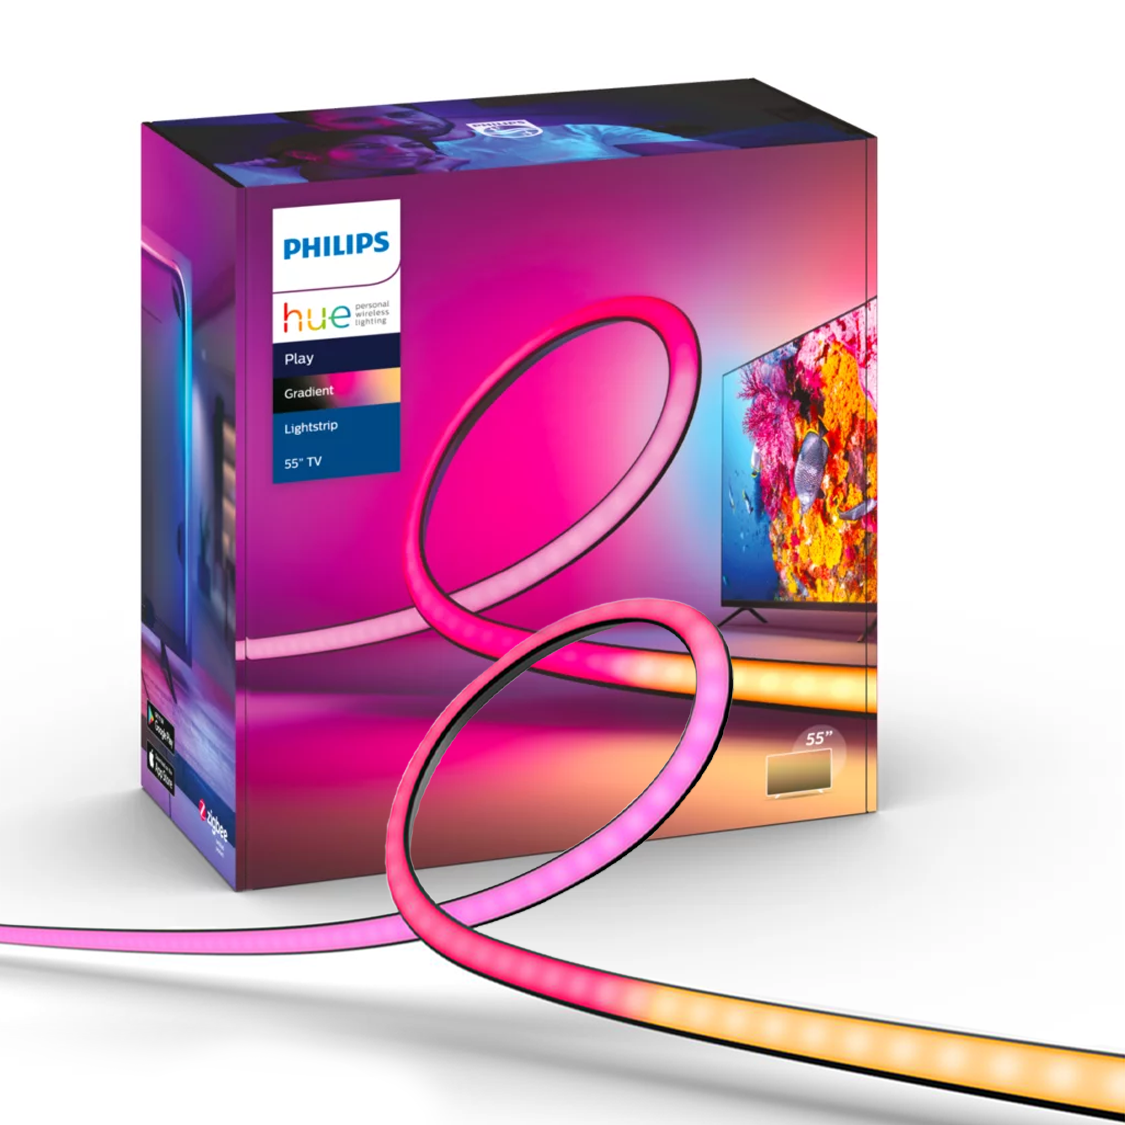 Photos - LED Strip Philips Светодиодная лента  Hue Play Gradient 55 для Ambilight подсветки те 